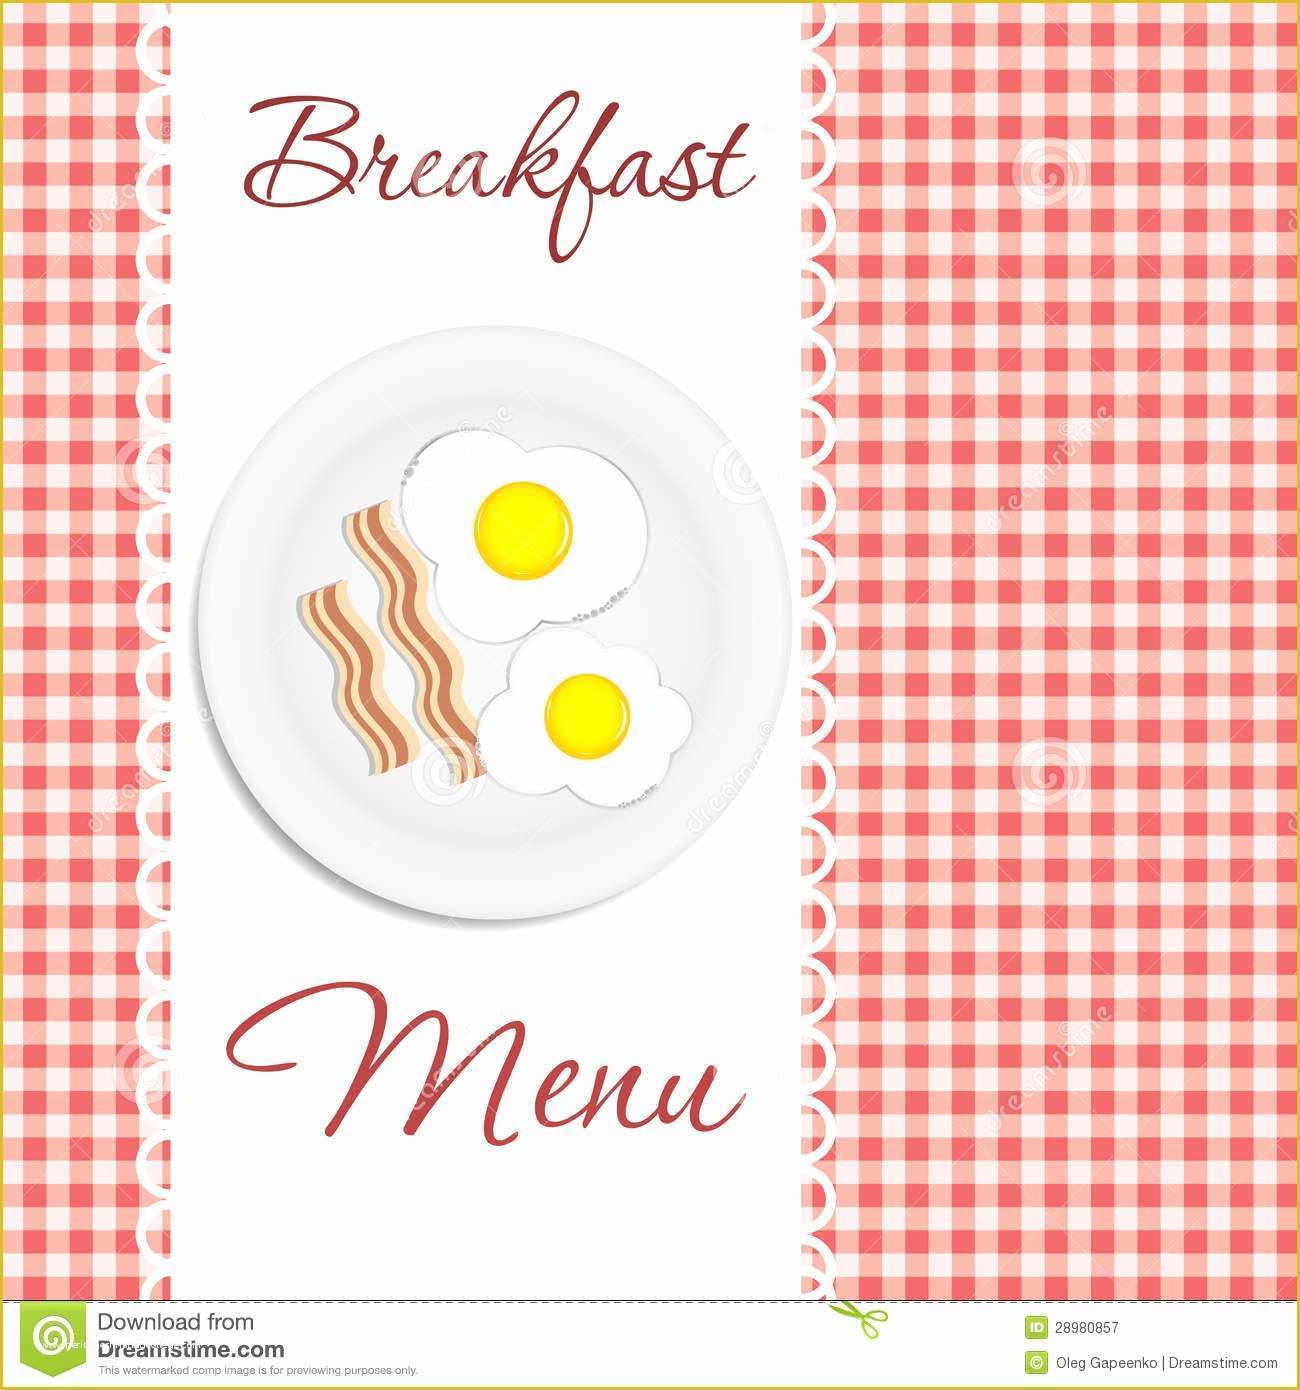 Free Printable Breakfast Menu Templates Of Breakfast Menu Vector Illustration Royalty Free Stock